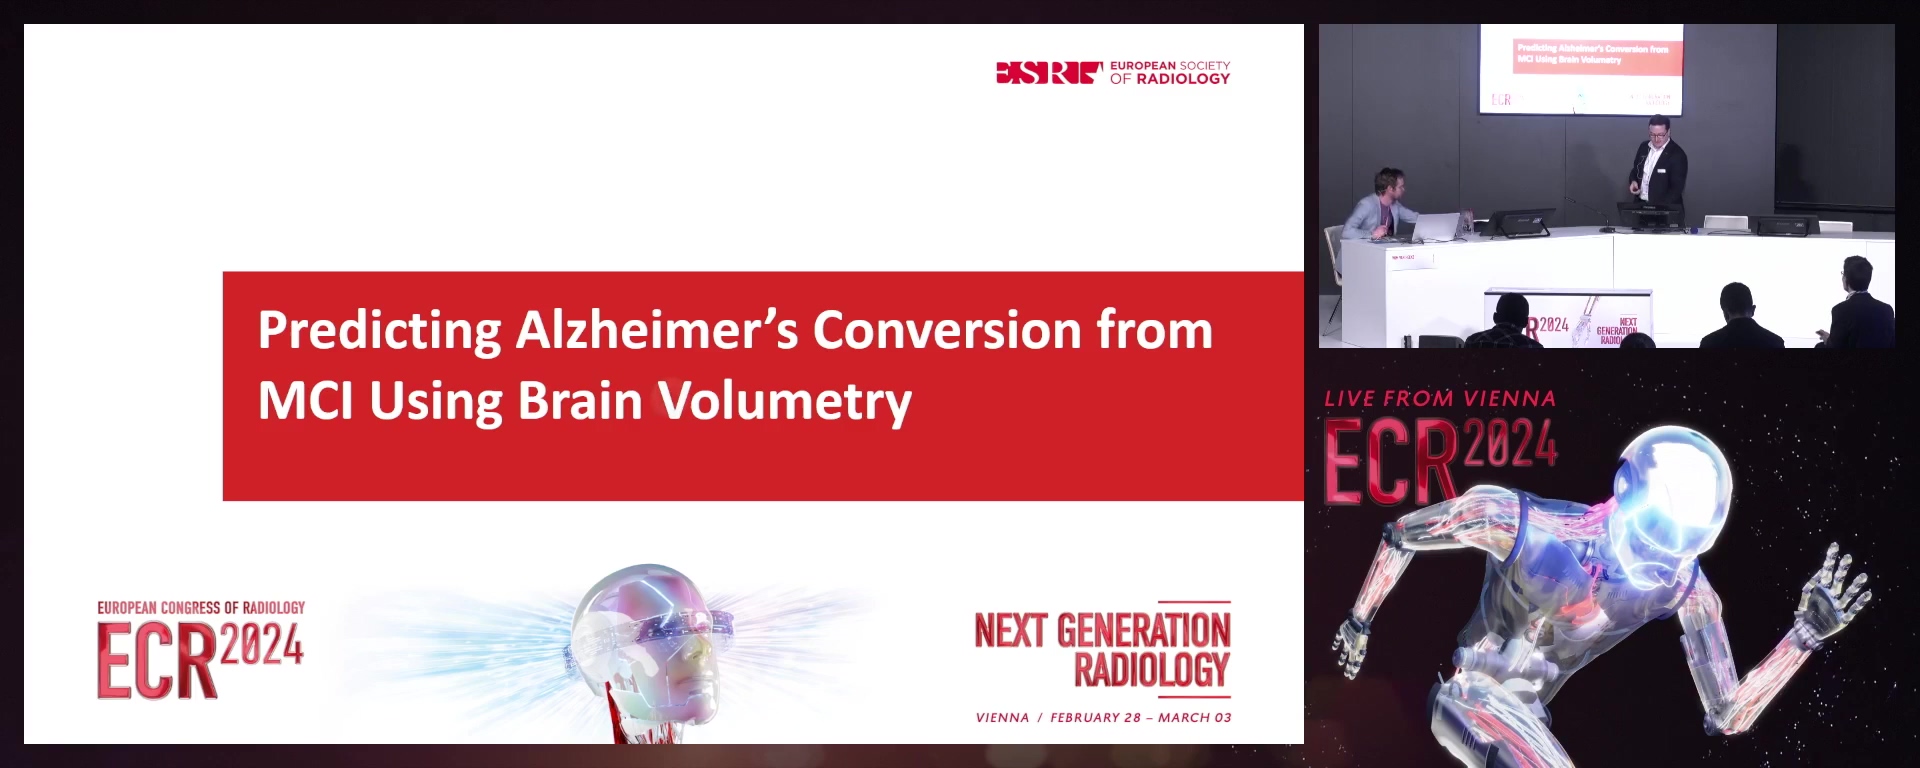 Predicting Alzheimer’s Conversion from MCI Using Brain Volumetry